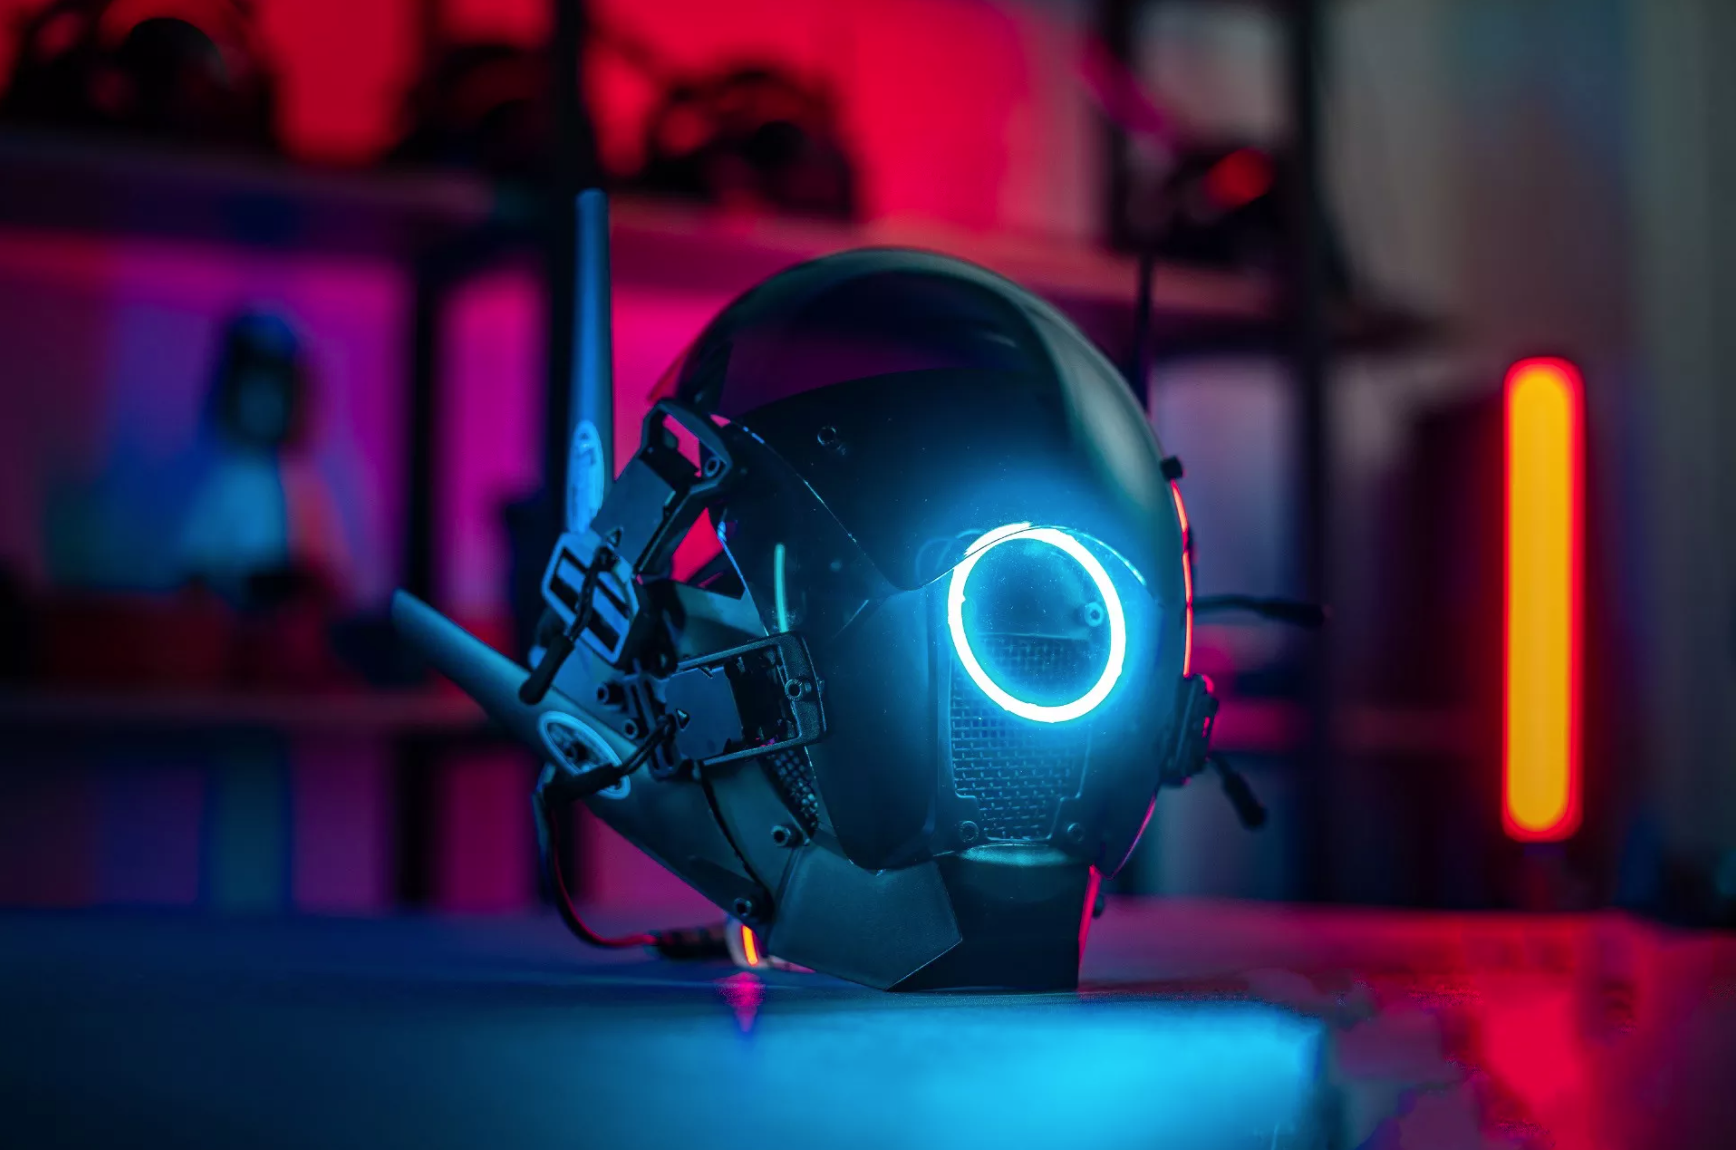 Cyberpunk Helmet Mask with Light Halloween Cosplay